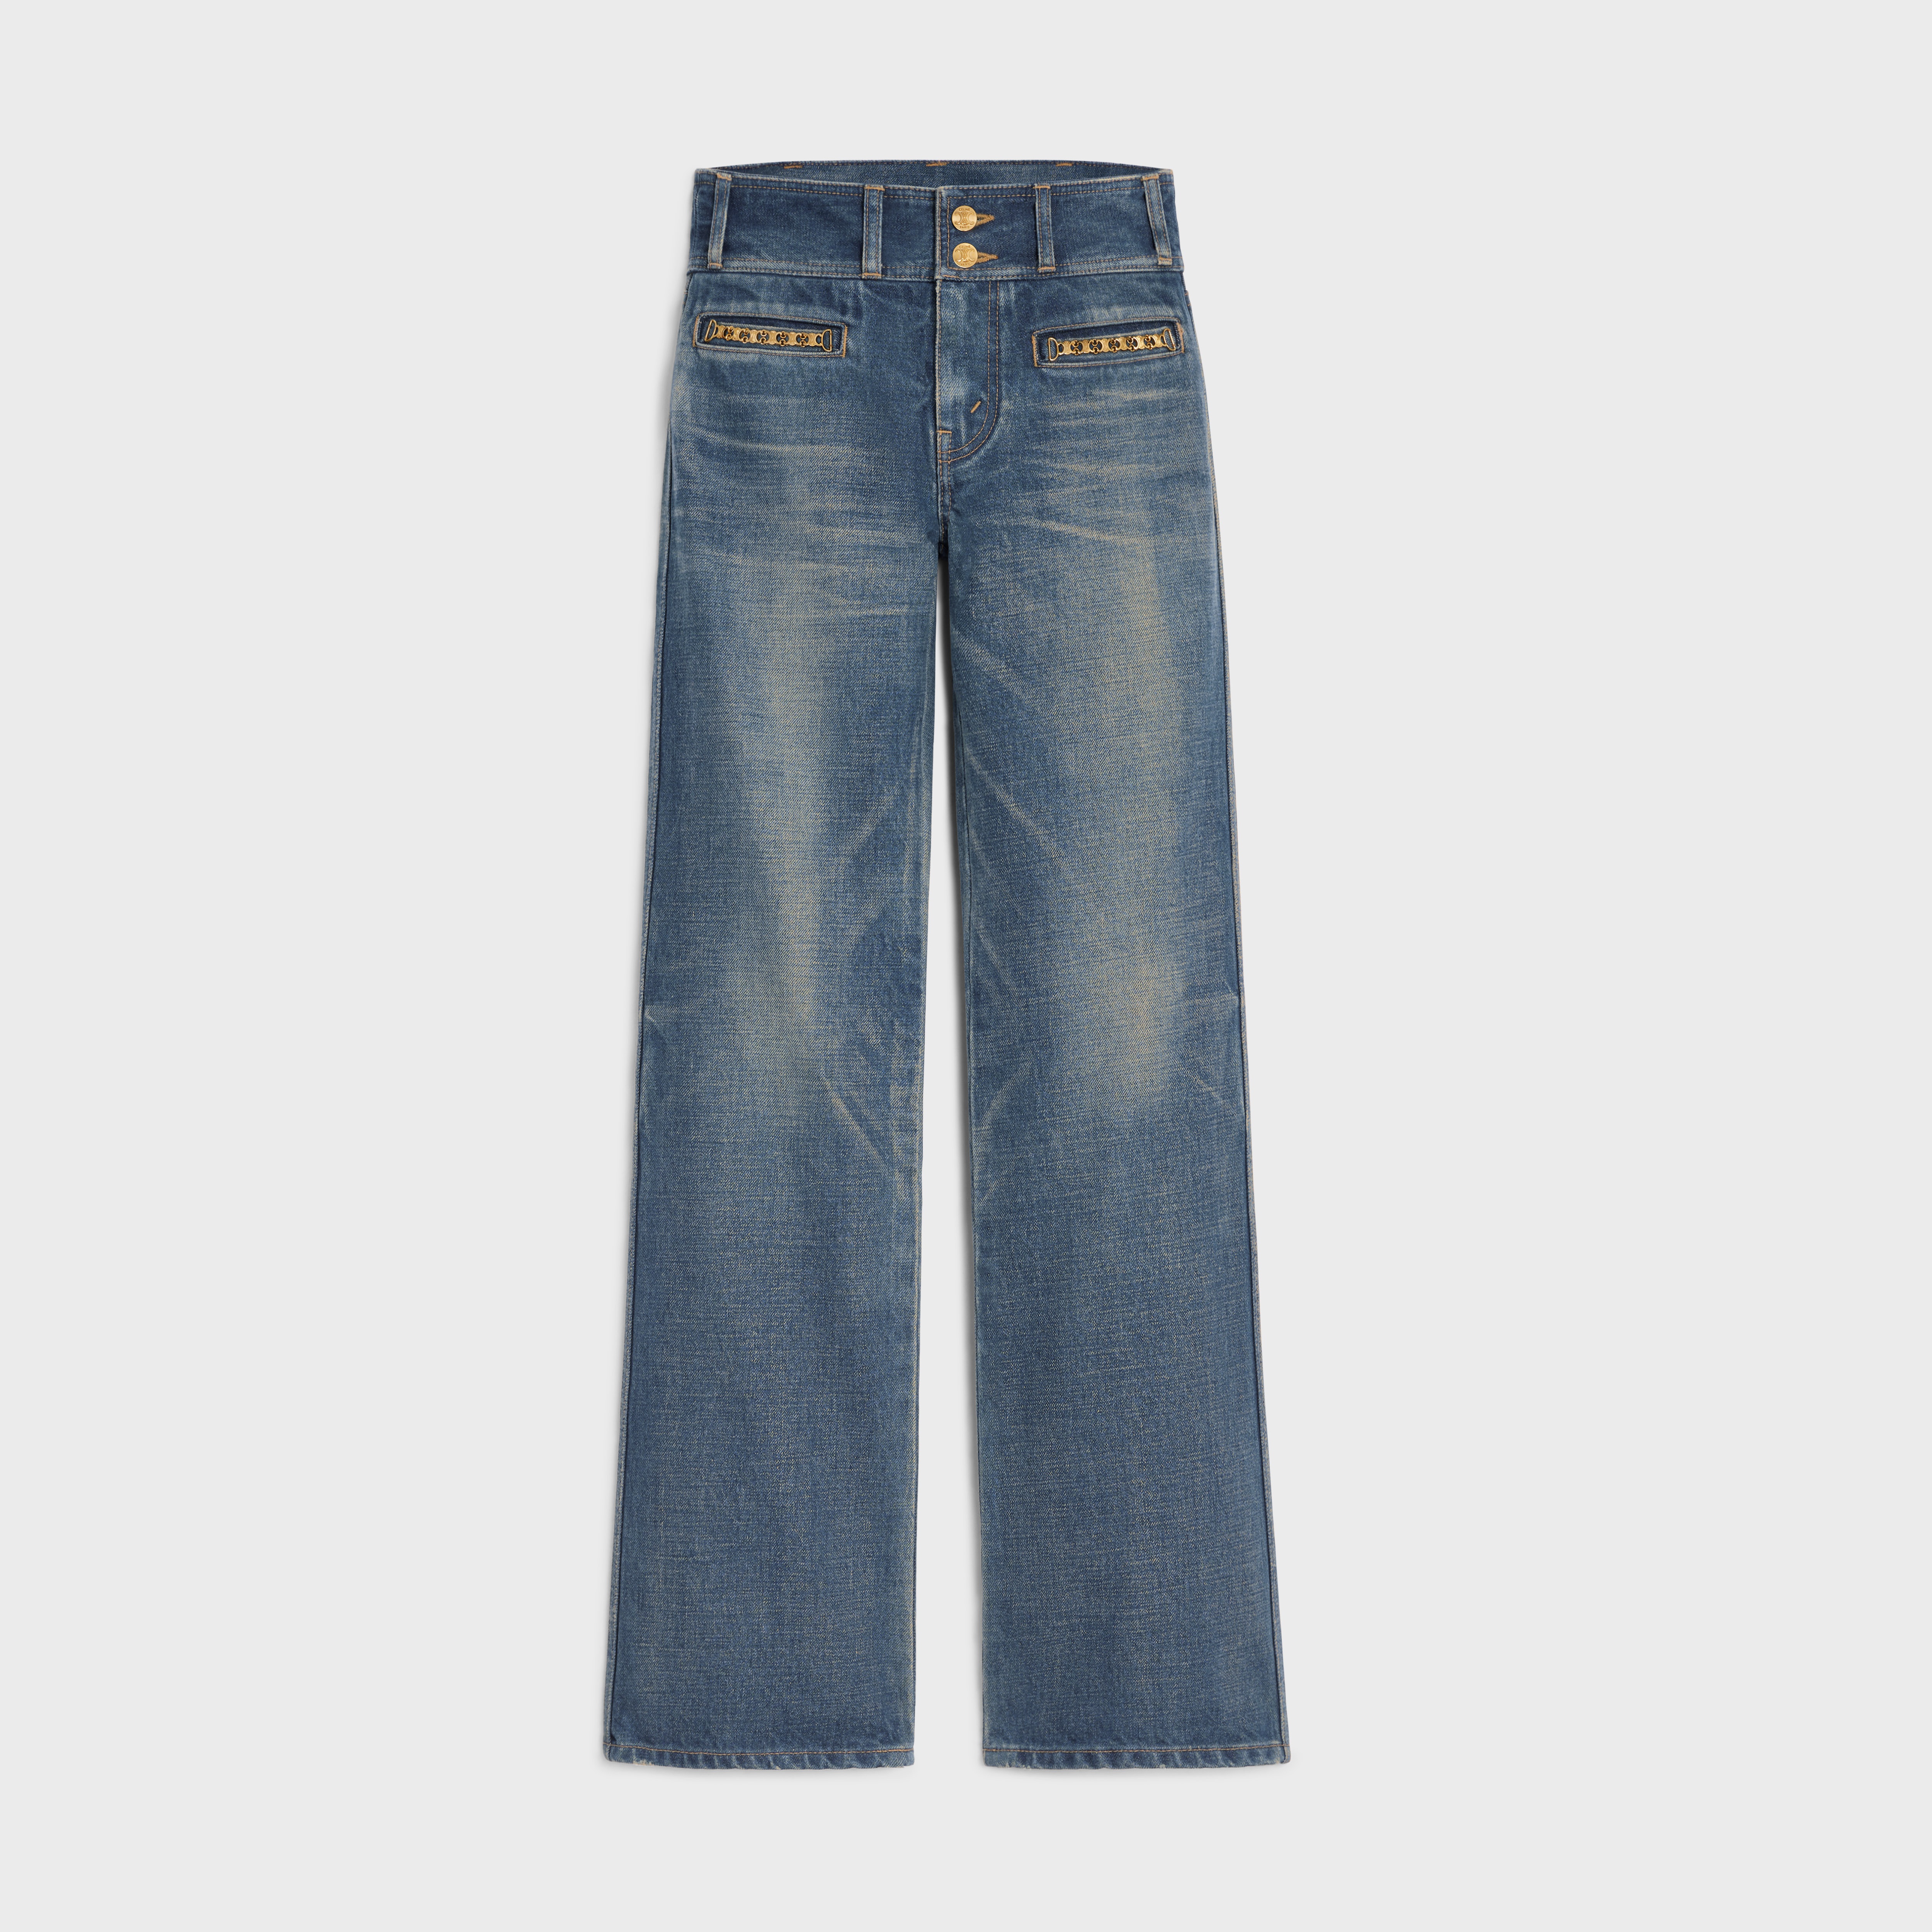 CELINE Jane flared jeans in dark union wash denim | REVERSIBLE